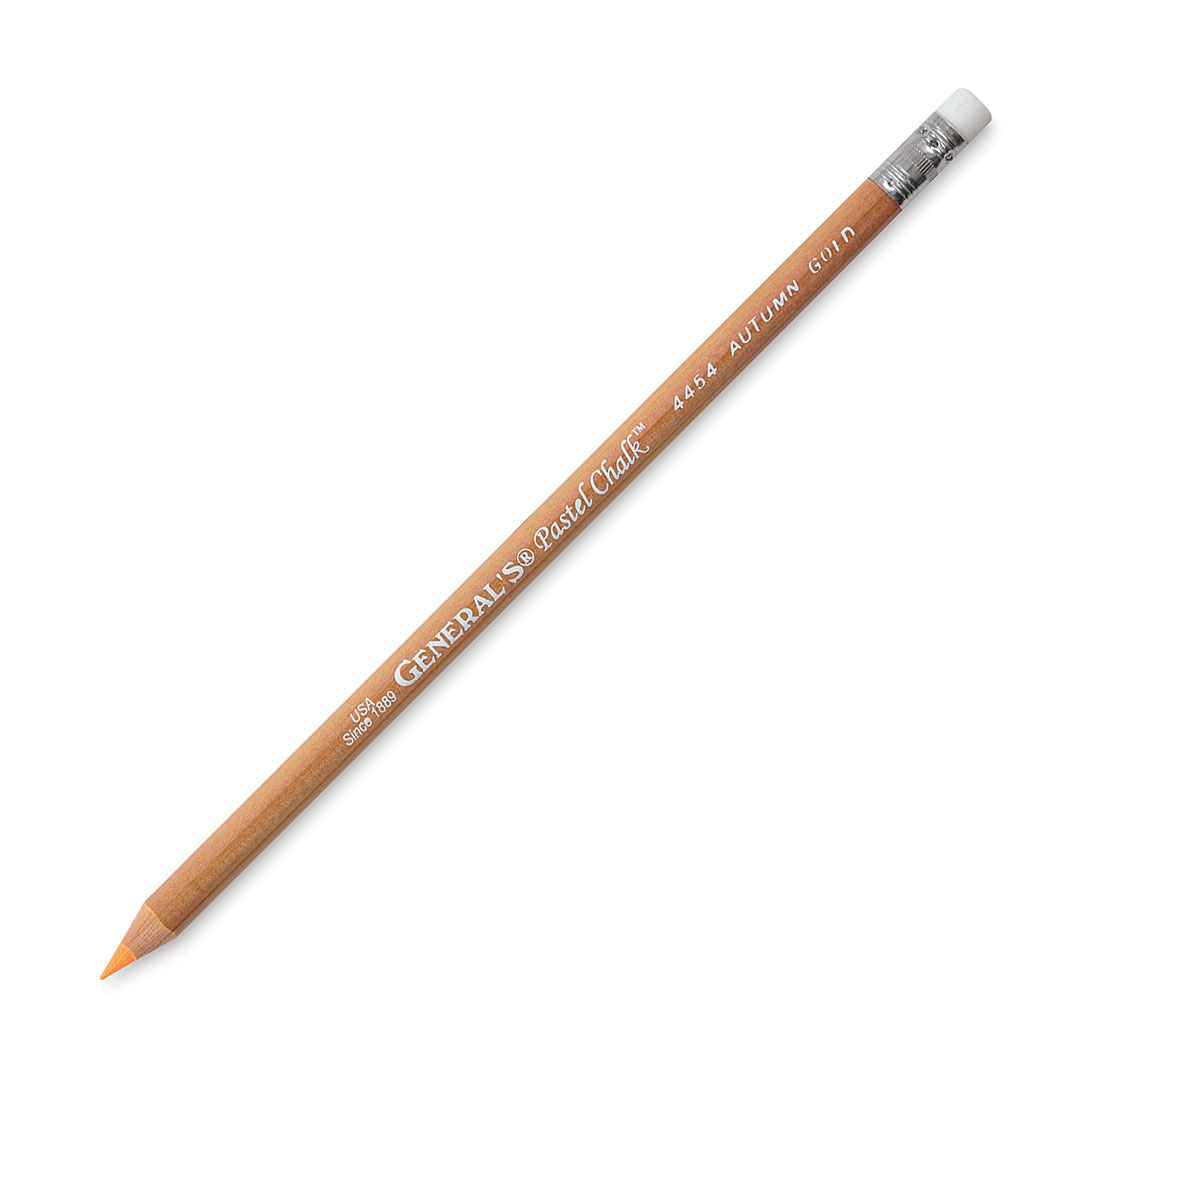 General's MultiPastel Chalk Pencils